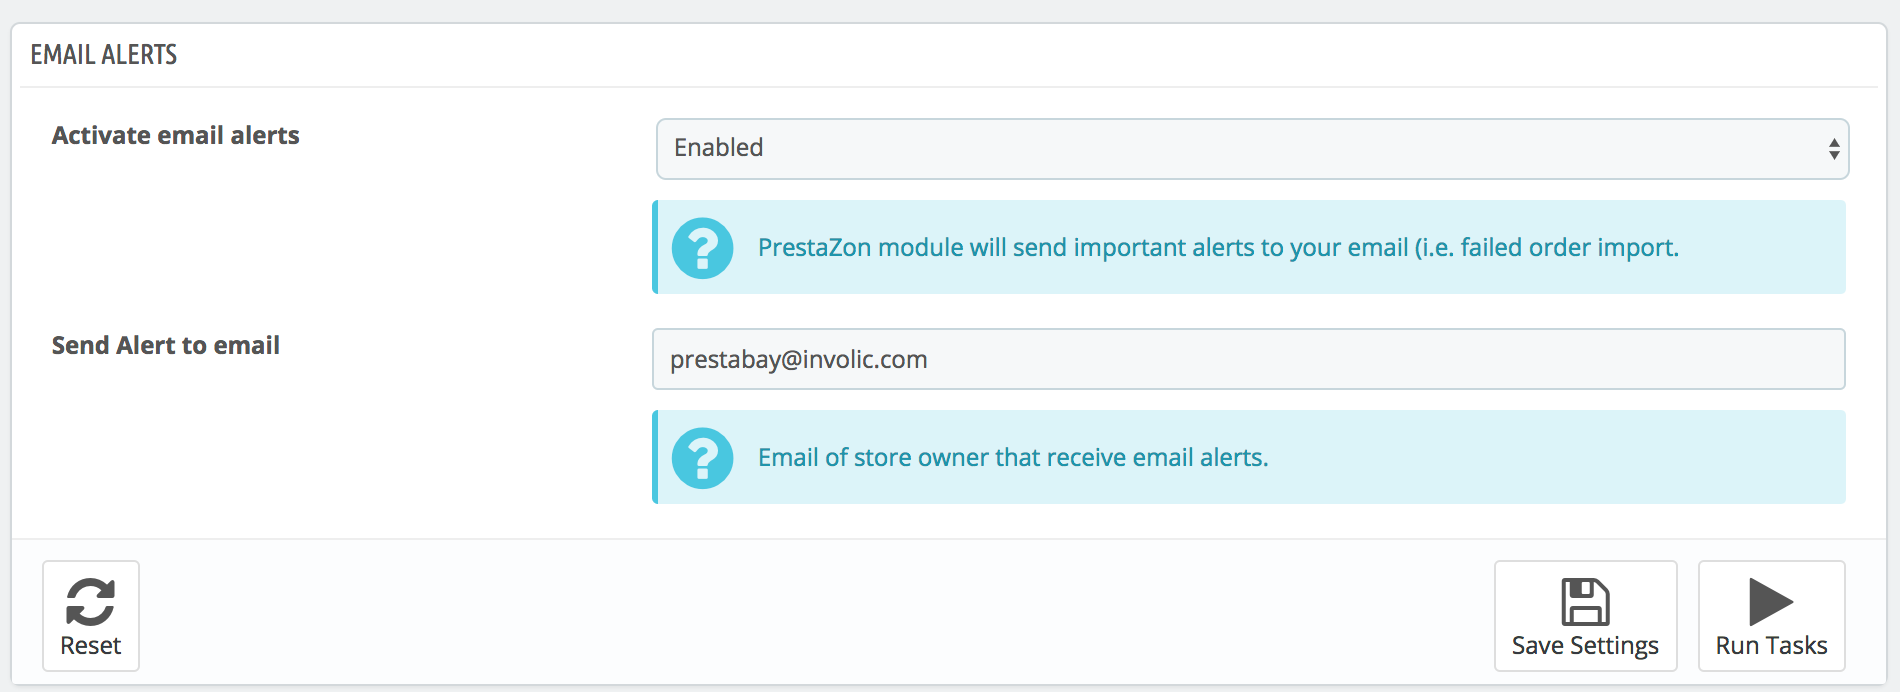 PrestaShop Amazon module — Email Alerts Options